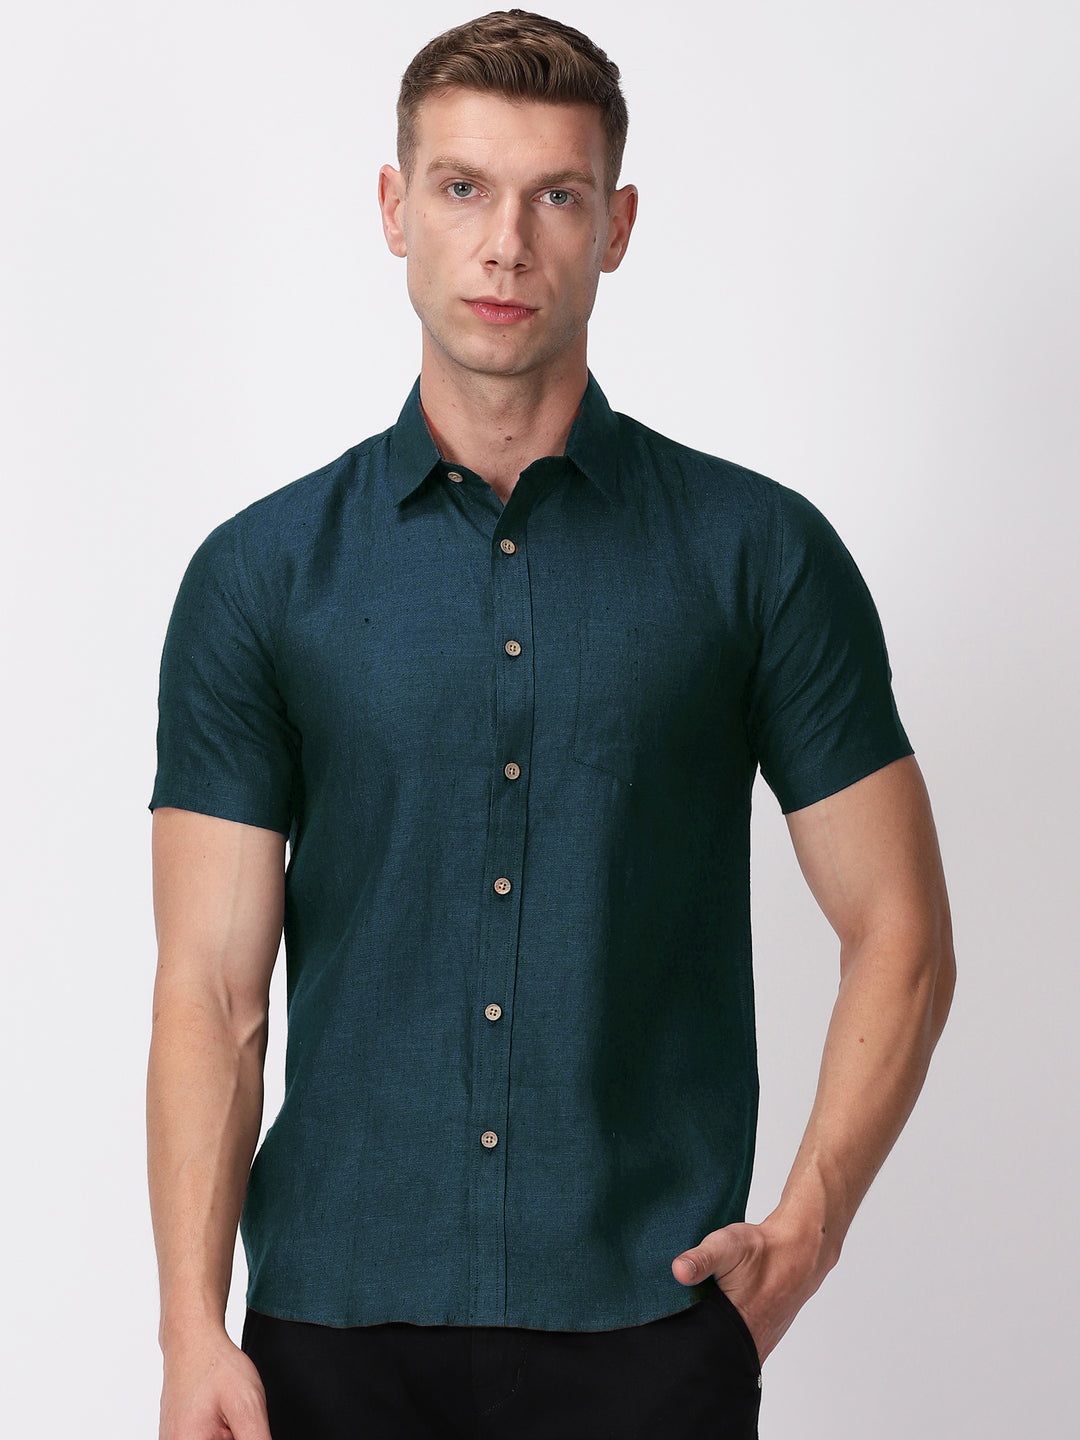 Harvey - Pure Linen Half Sleeve Shirt - Midnight Blue